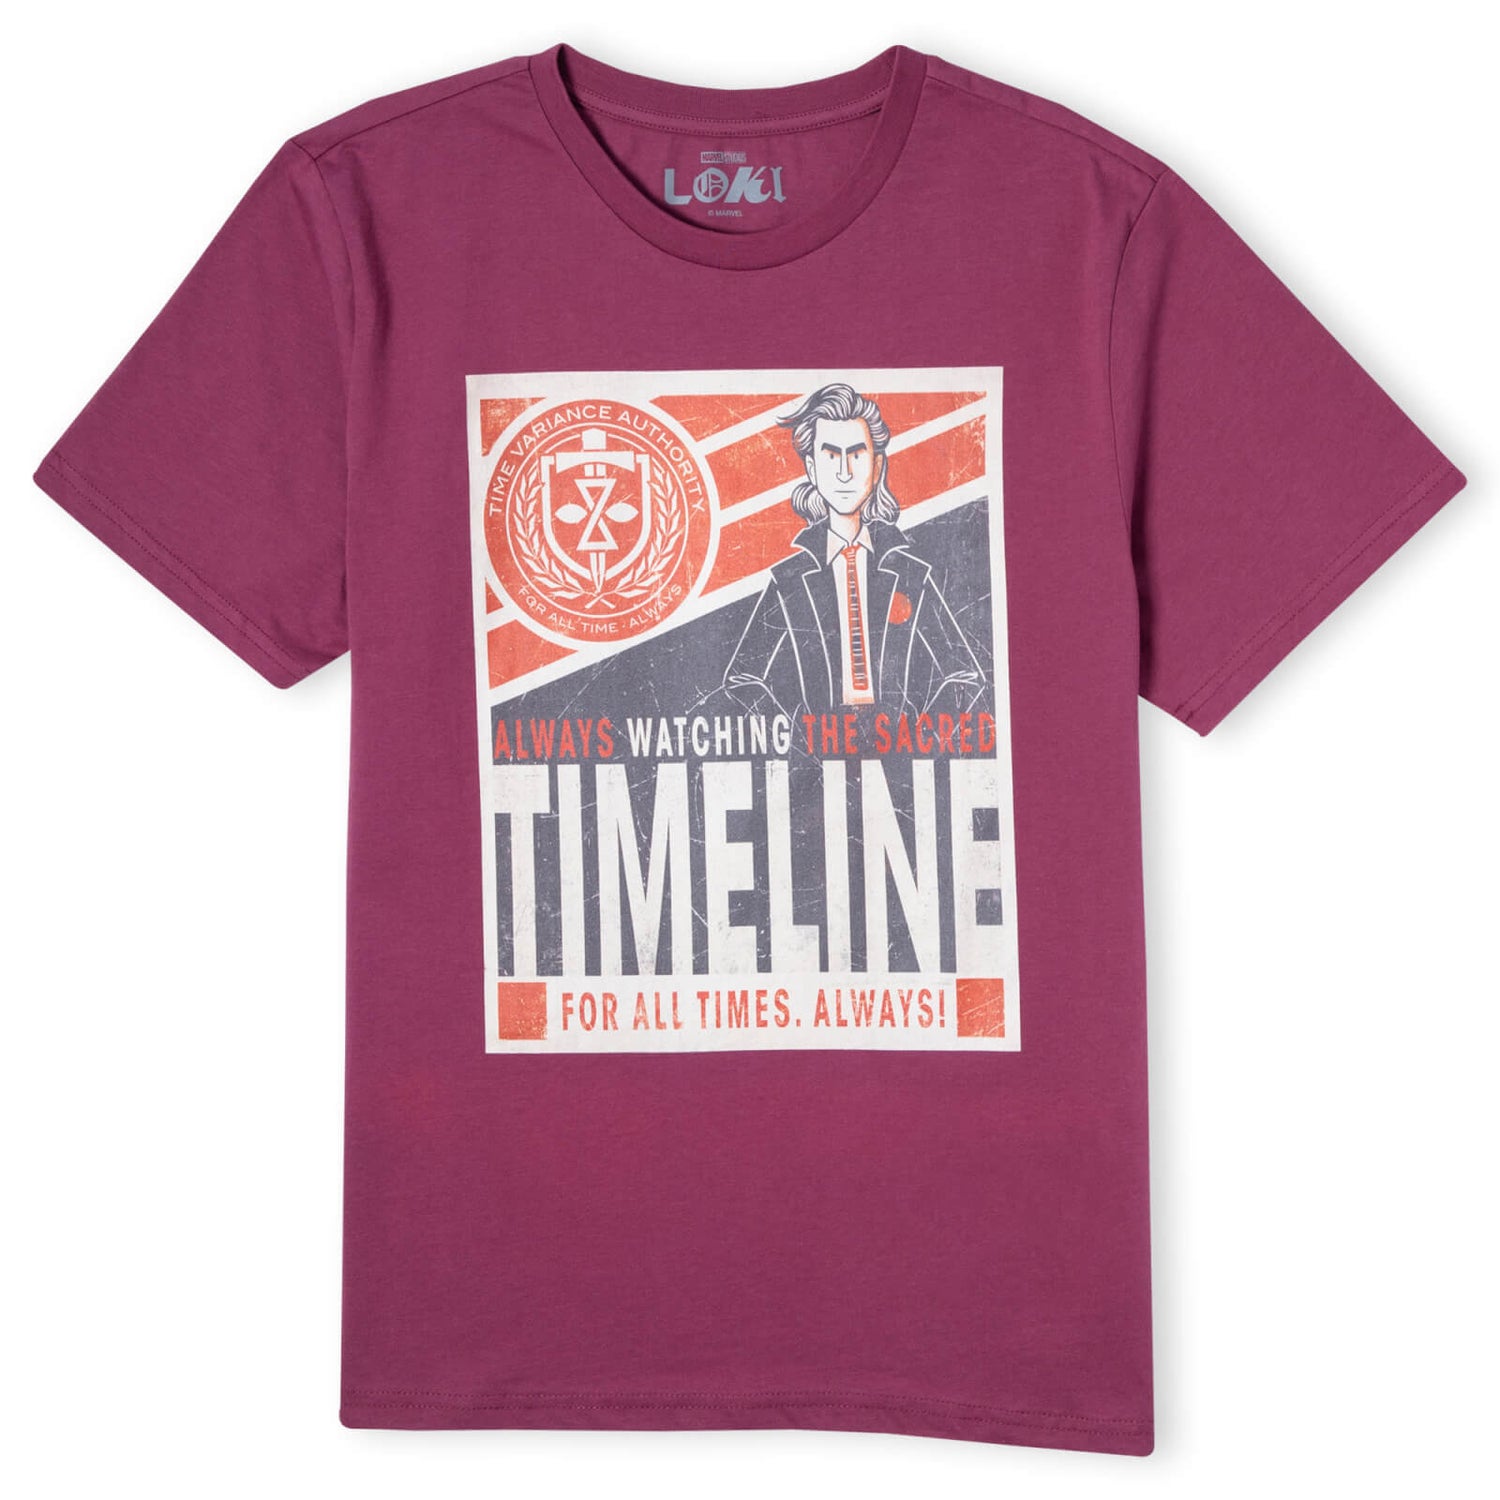 Marvel Timeline Men's T-Shirt - Burgundy